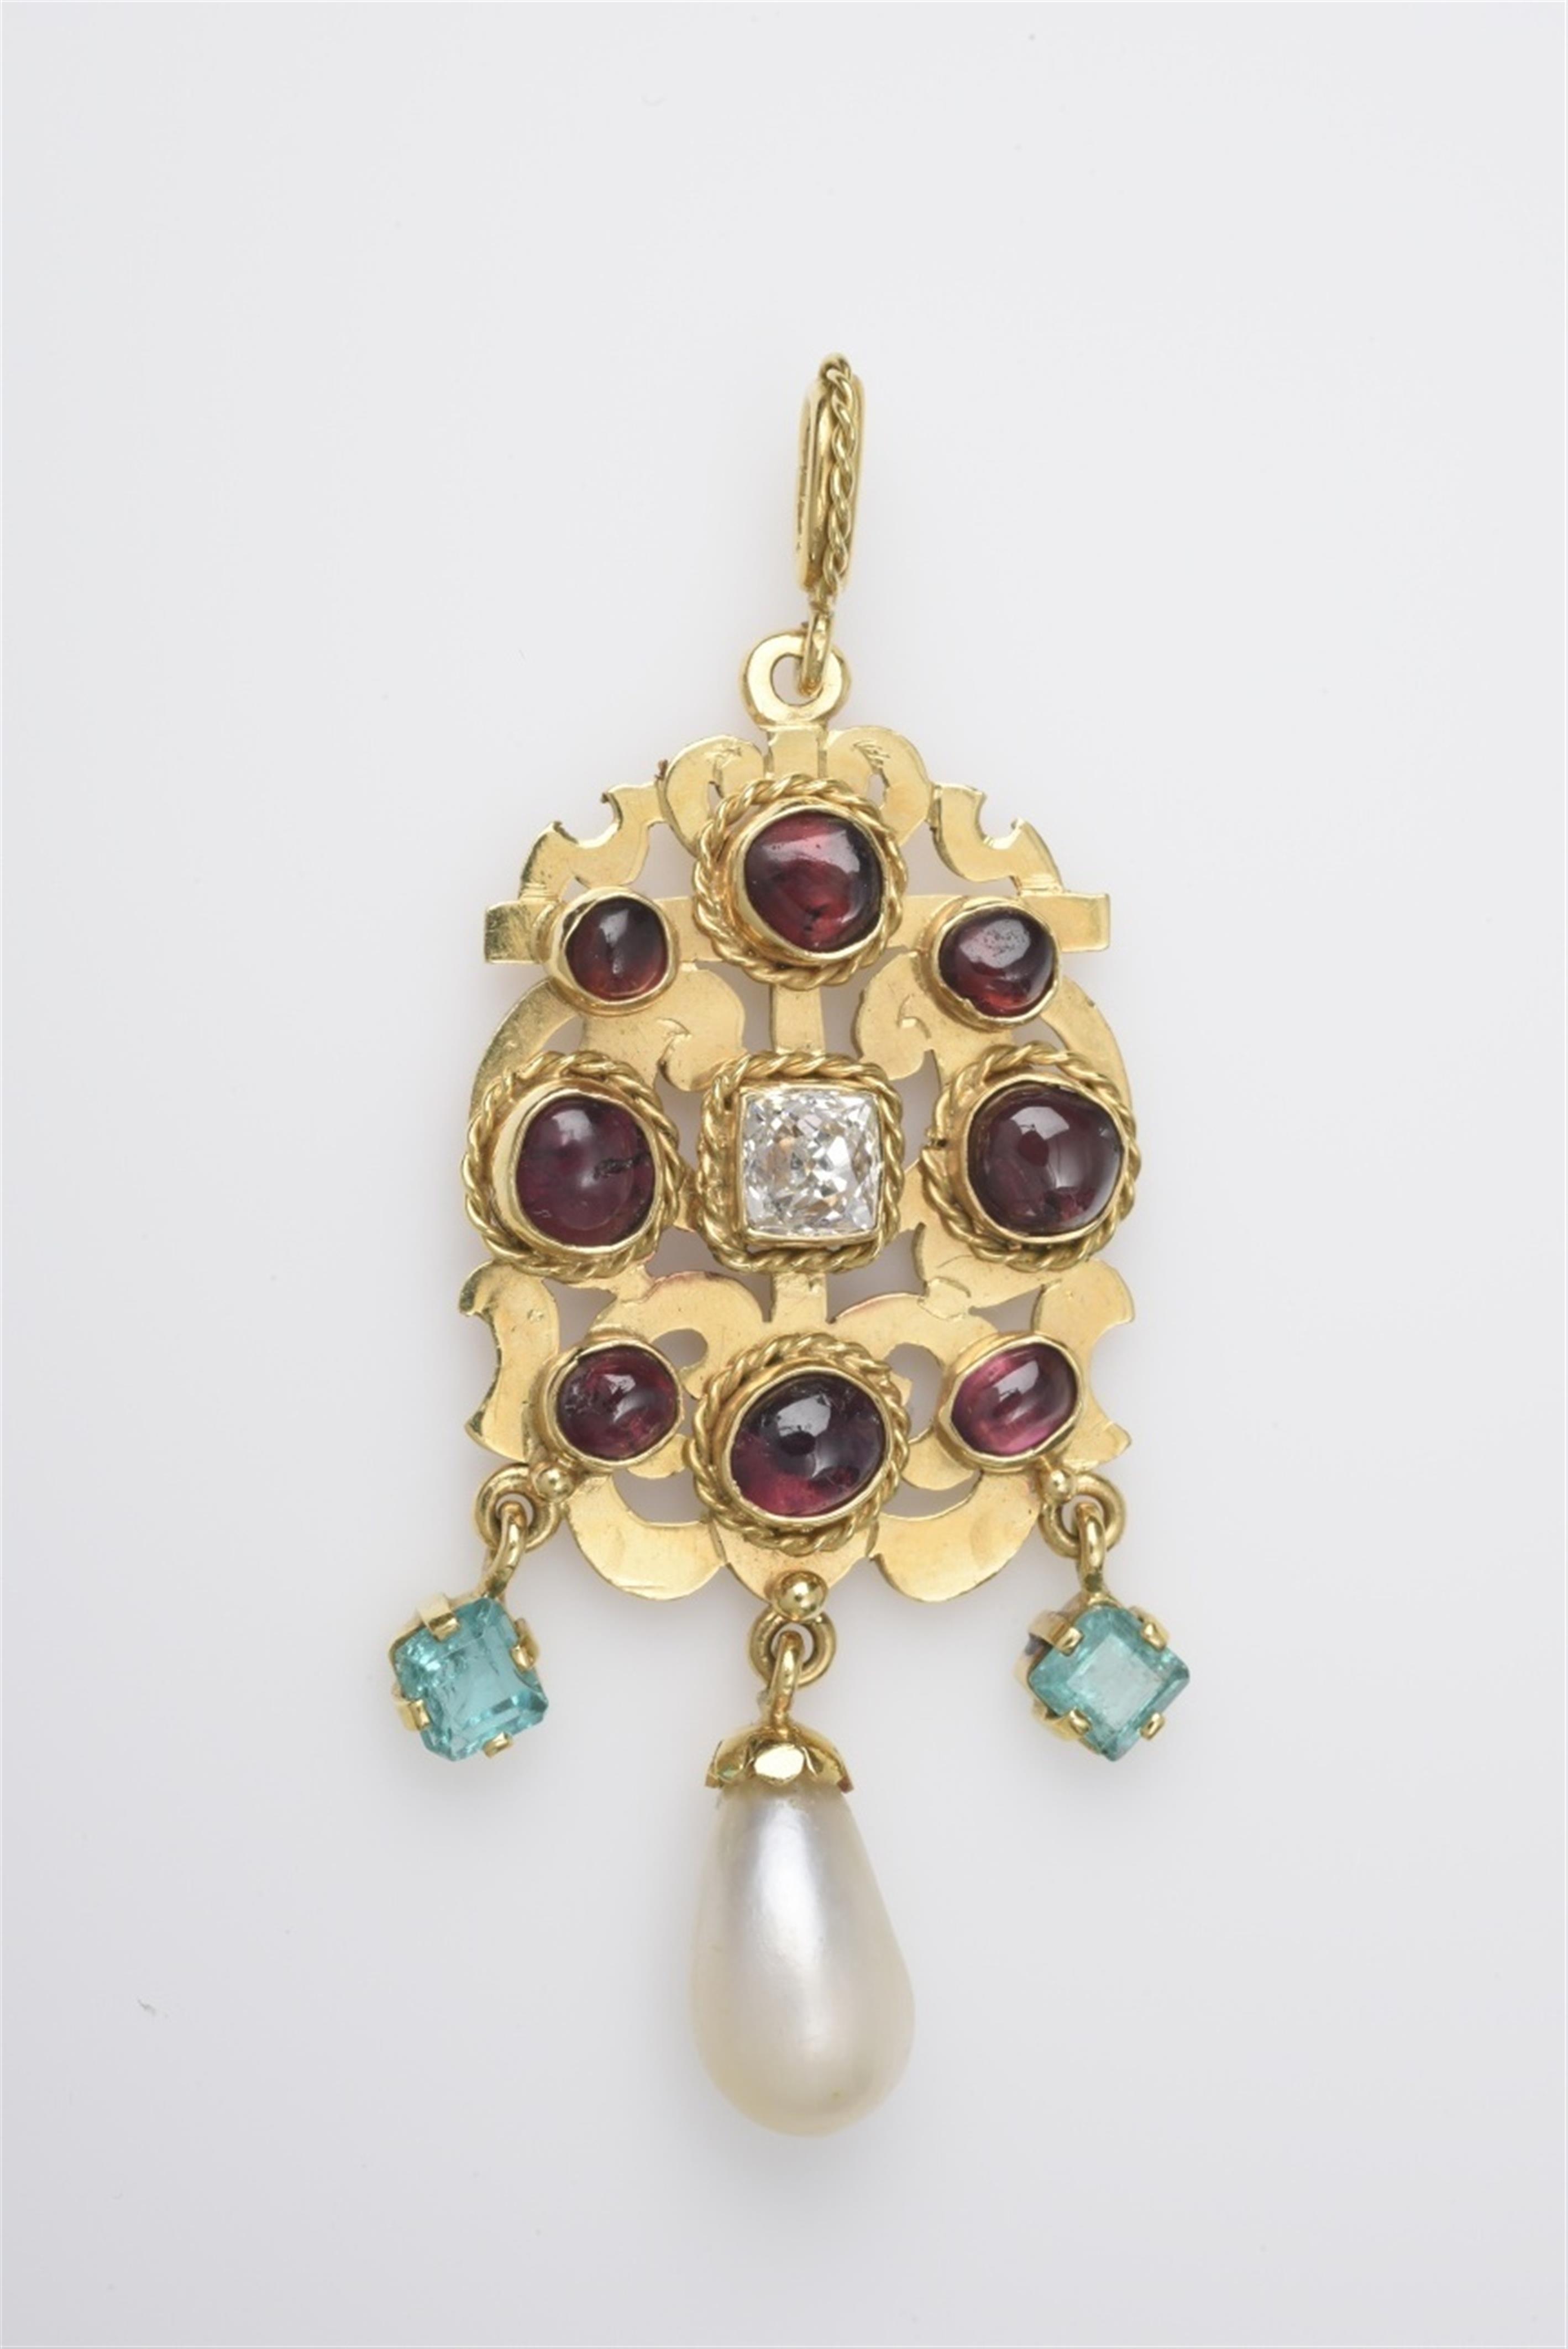 An 18k gold pendant in the Renaissance taste - image-1